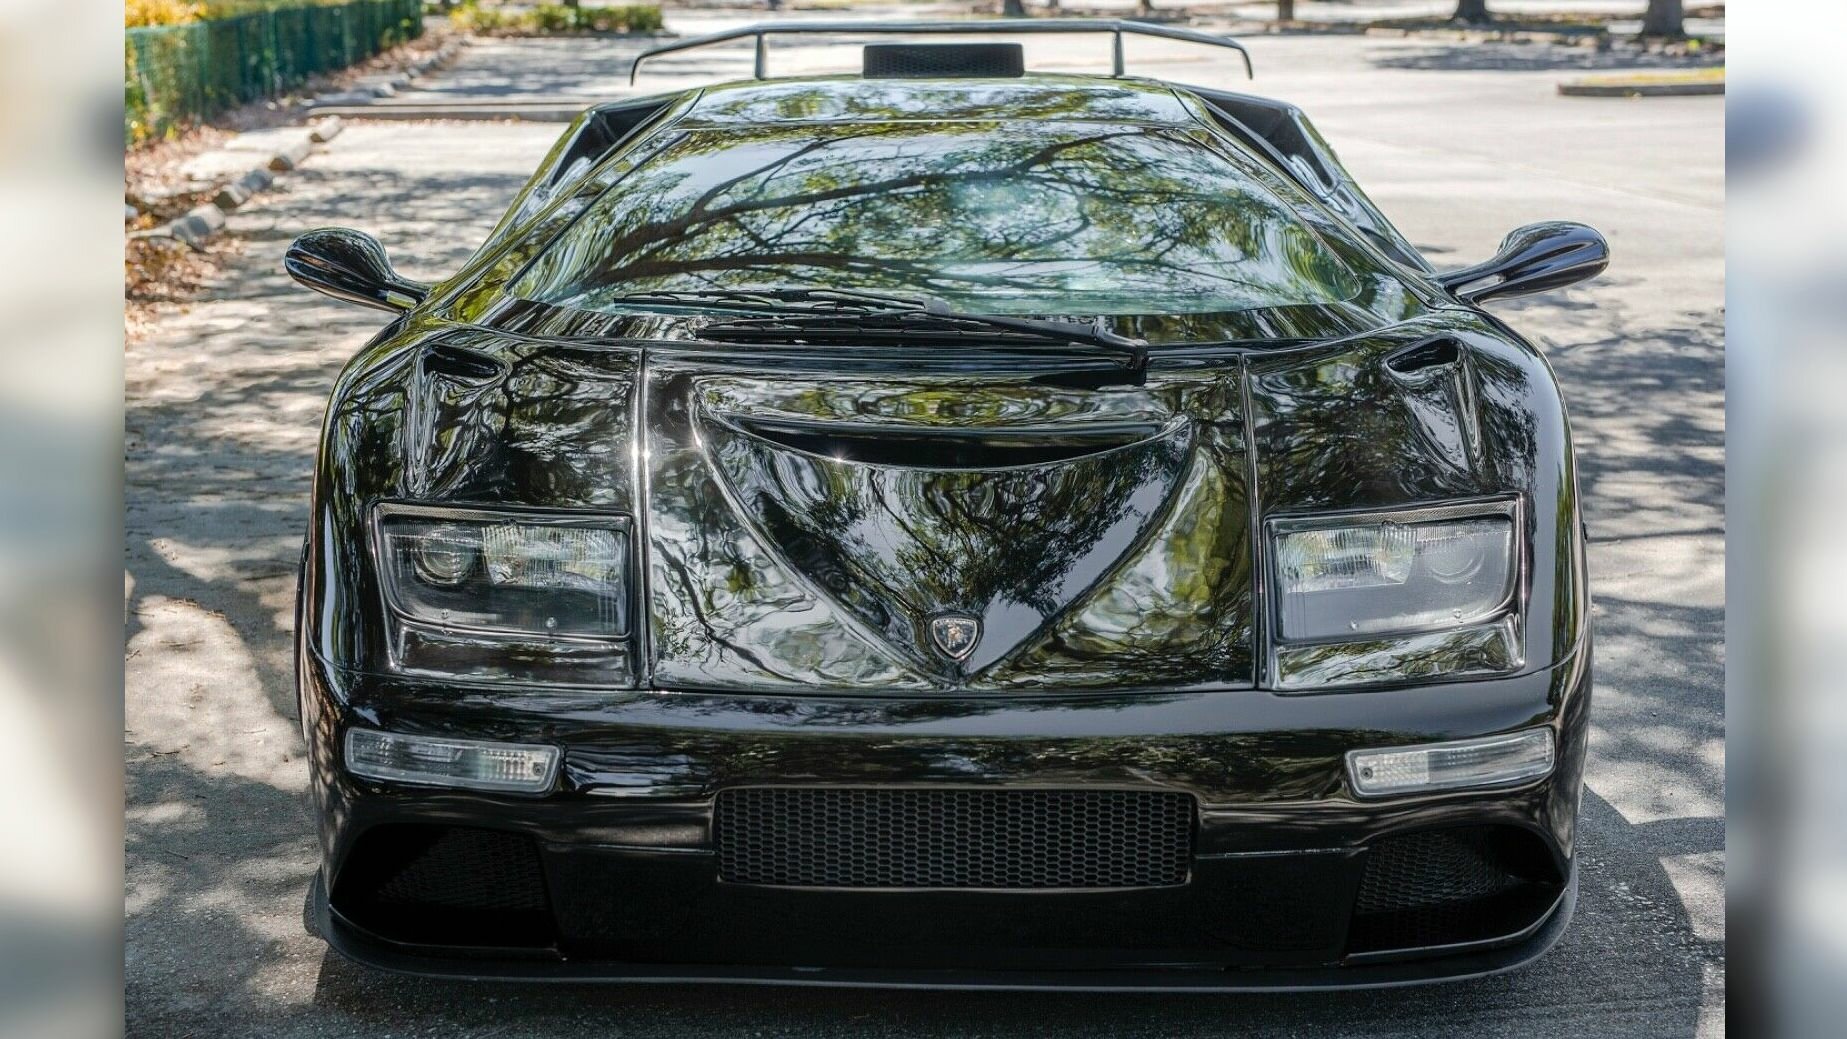 На онлайн-аукционе идут торги за реплику Lamborghini, построенную на базе культовой Honda